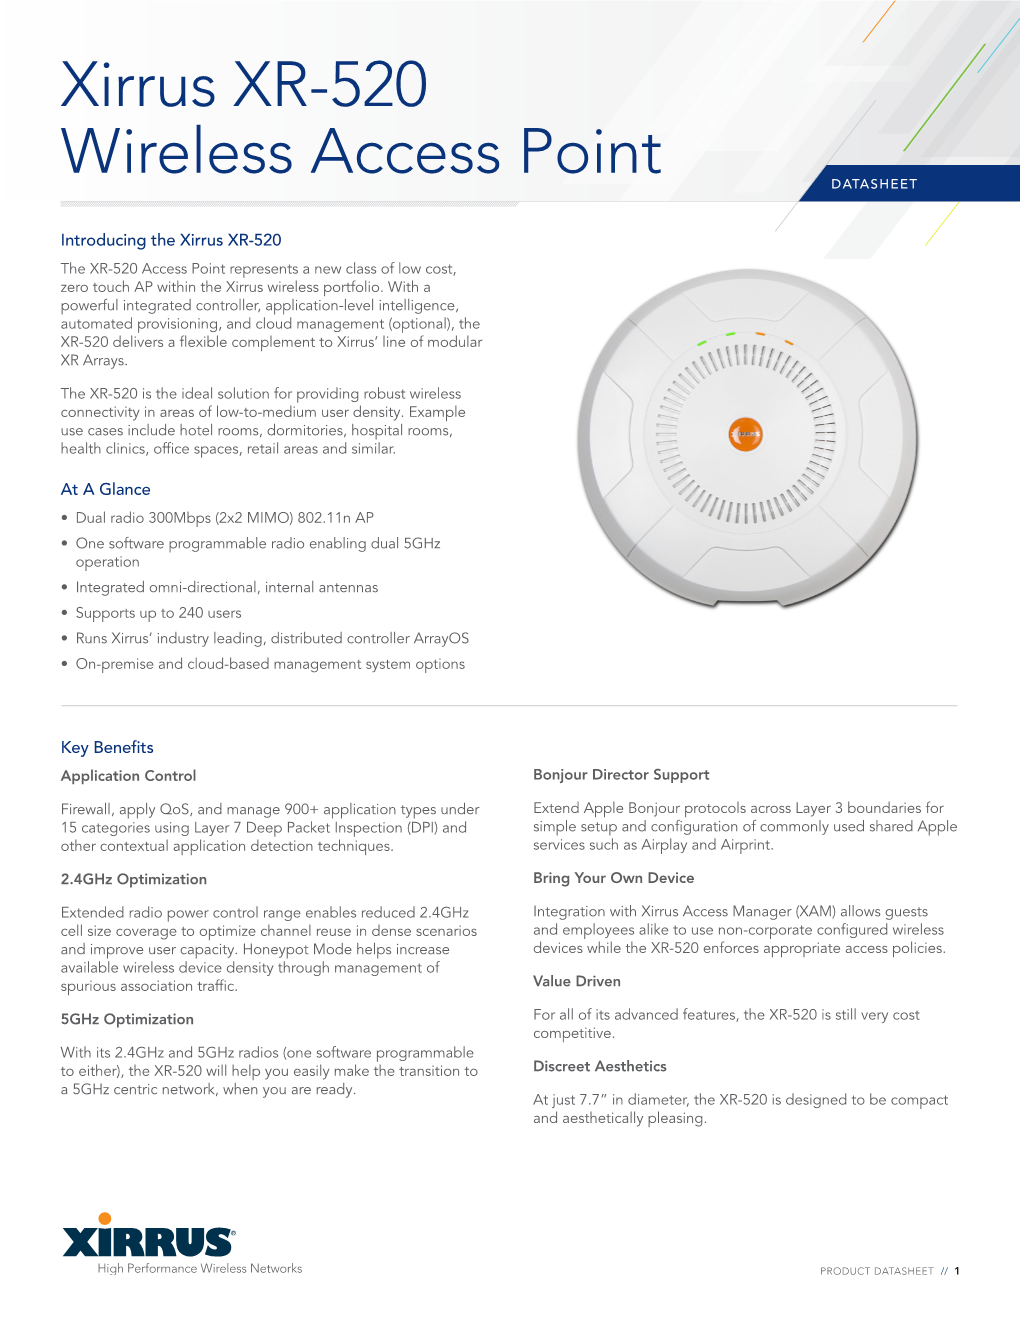 Xirrus XR-520 Wireless Access Point (PDF)